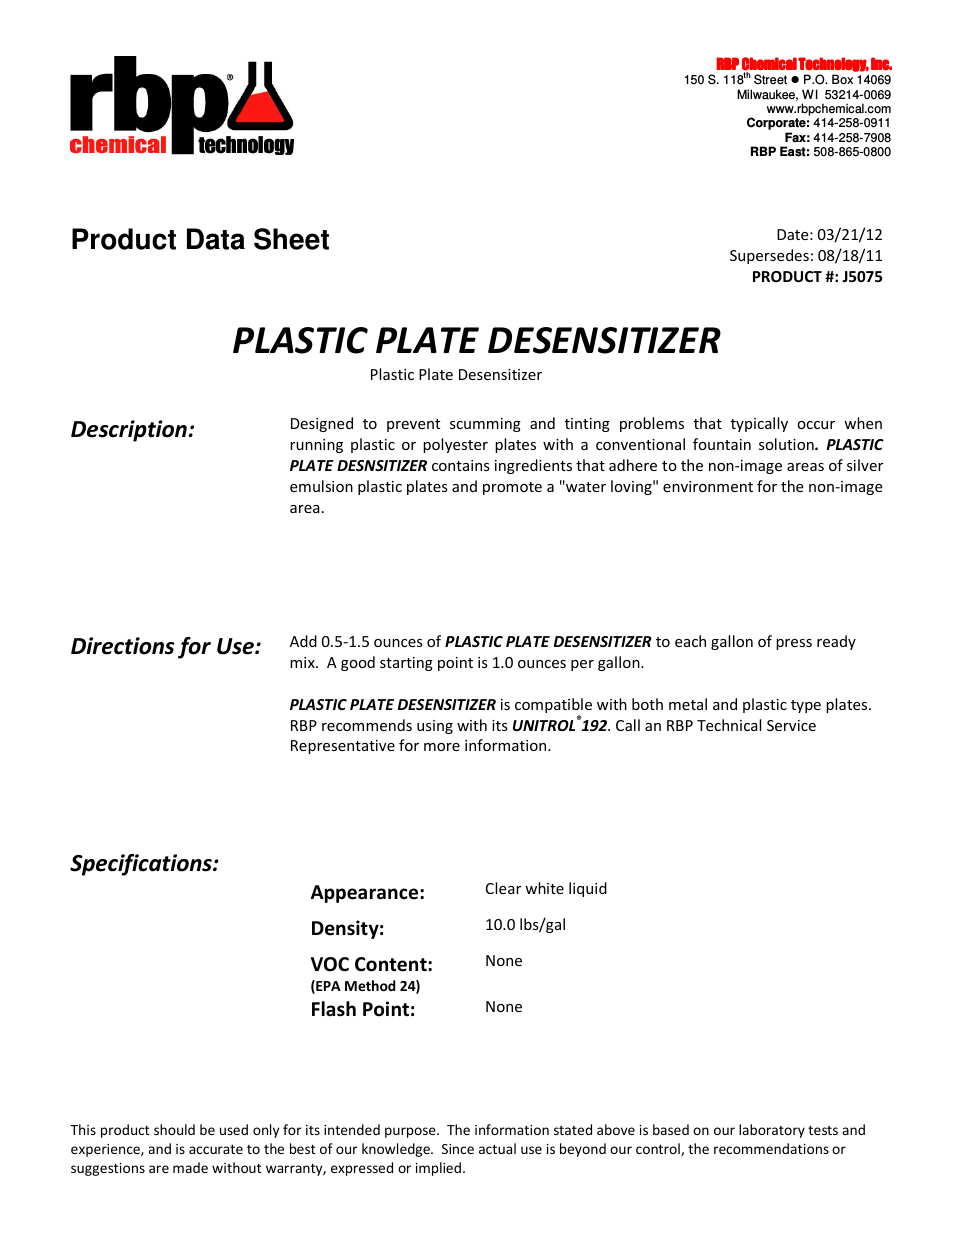 J5075 PLASTIC PLATE DESENSITIZER